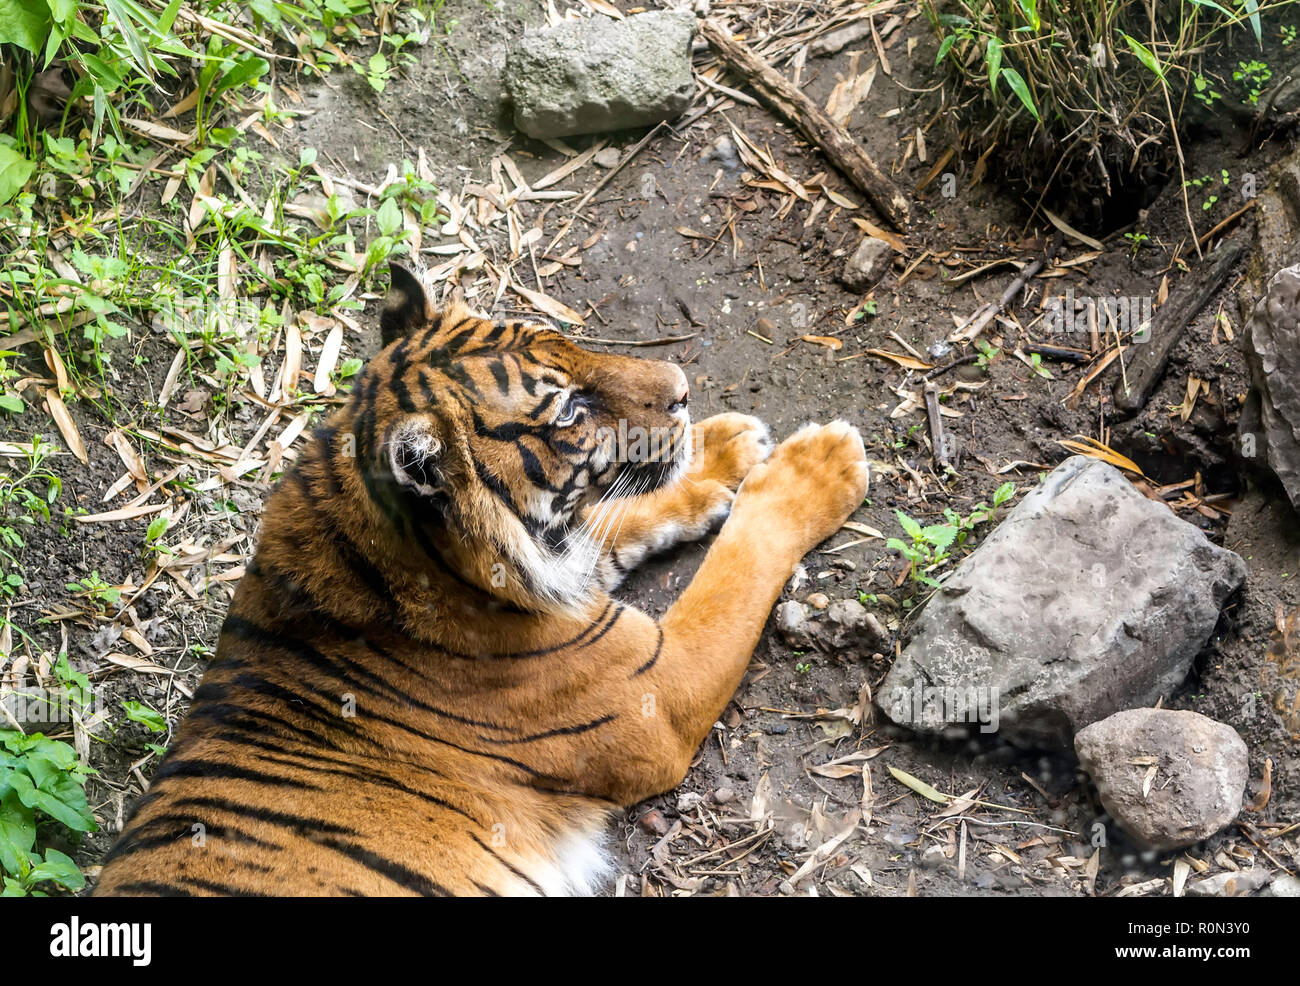 Tigre de Sumatra (Panthera tigris sondaica) Reposant calmement sur le sol. Banque D'Images